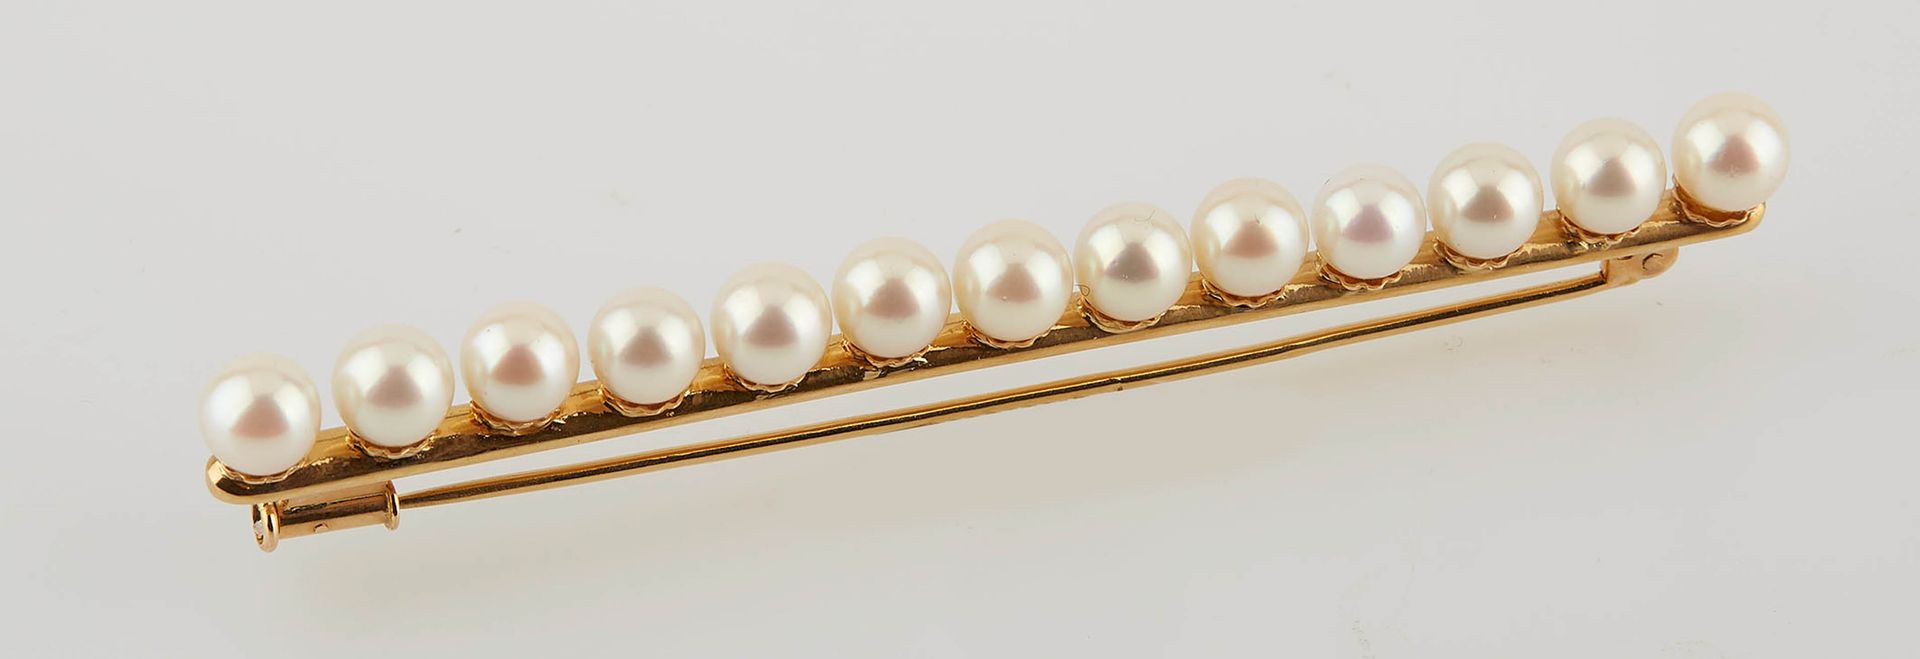 Null 黃金髮夾鑲有十三顆養殖珍珠。长度：8.5厘米。重量（毛重）：13克。